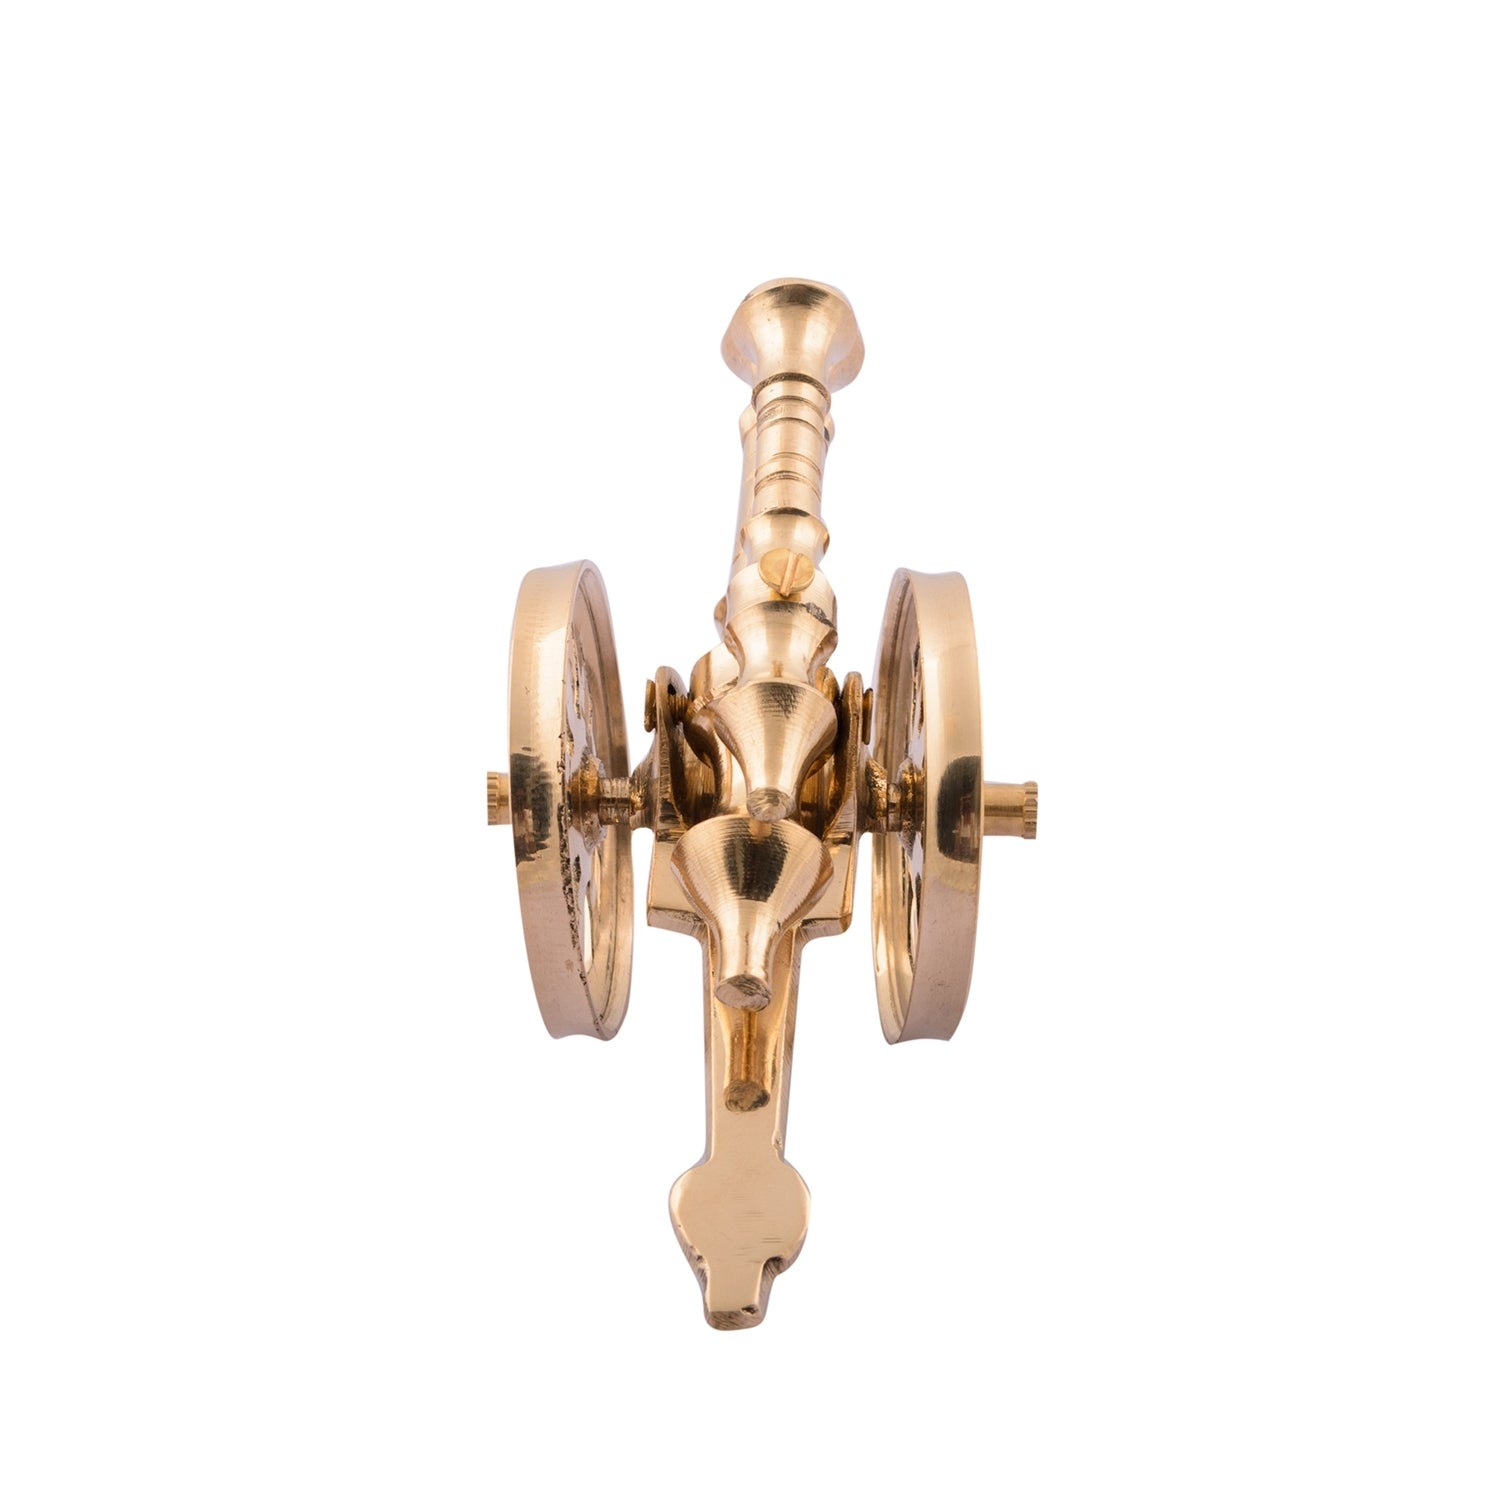 Gold Brass Decorative Cannon Showpiece for Home Décor 4